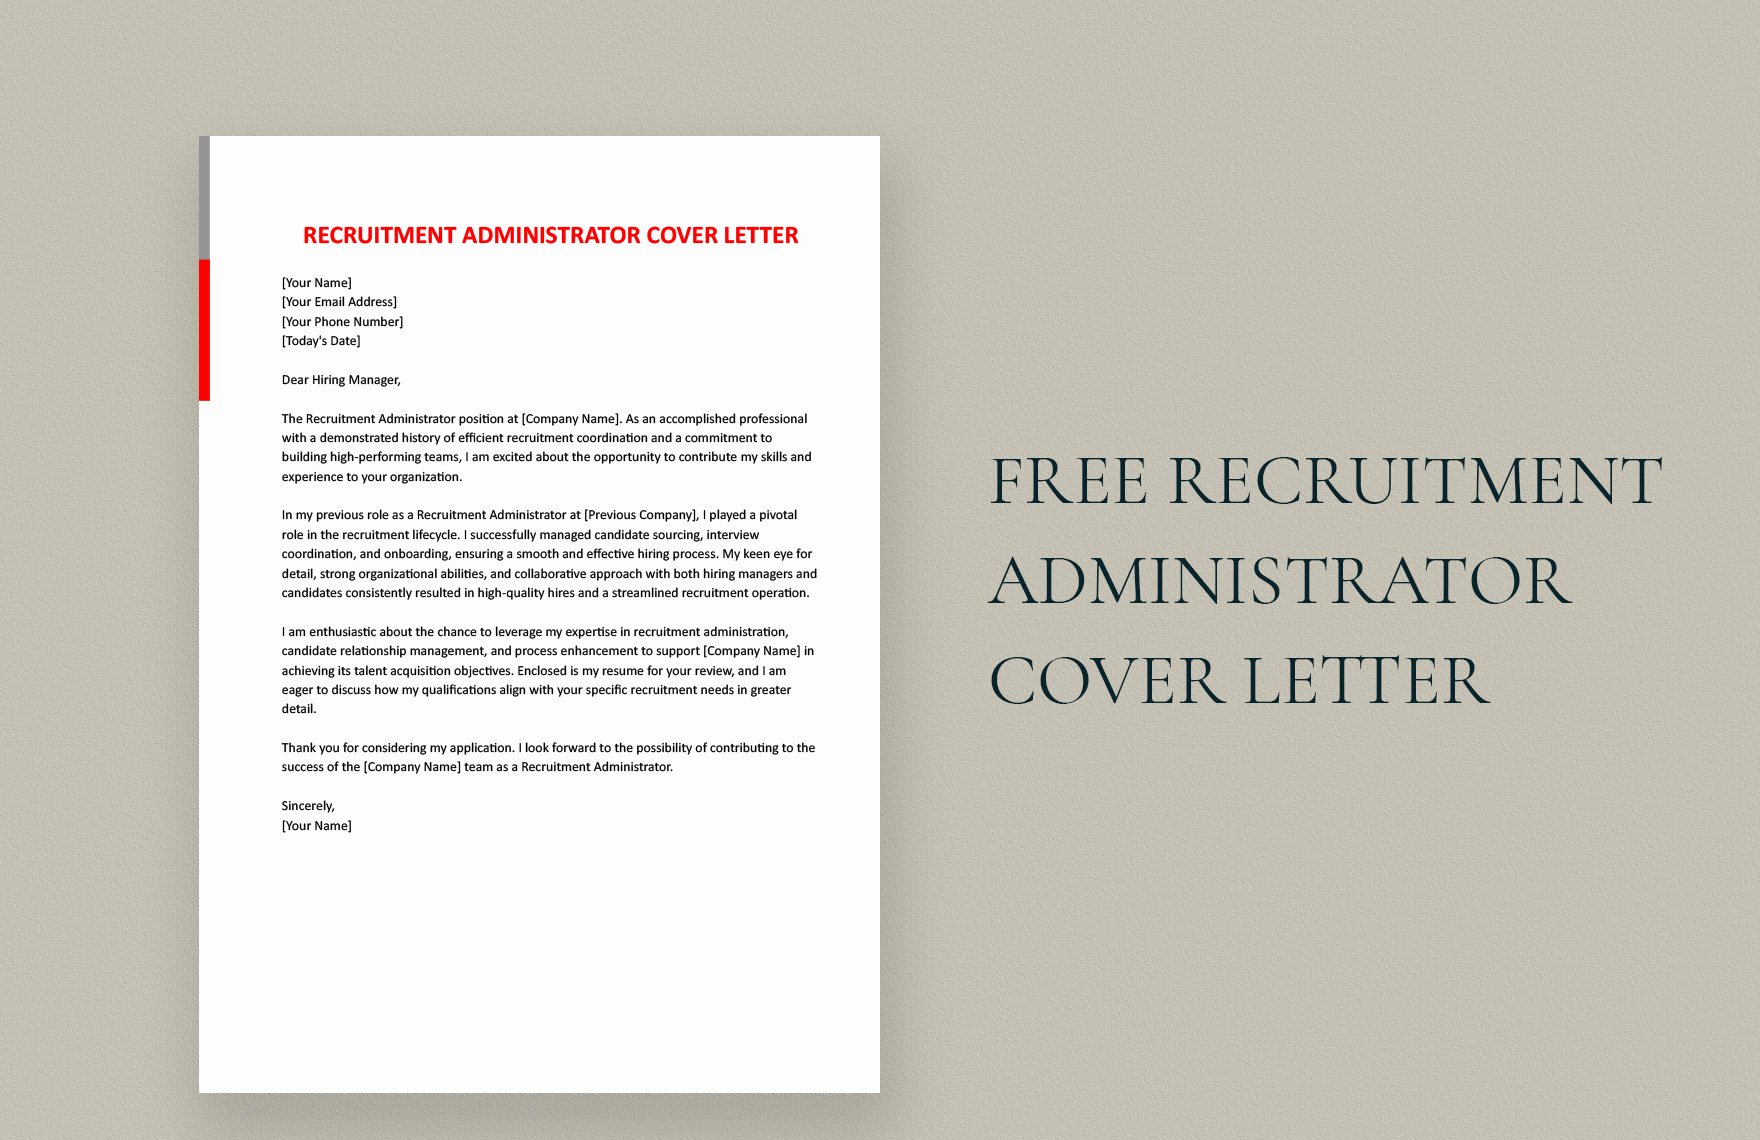 Recruitment Administrator Cover Letter